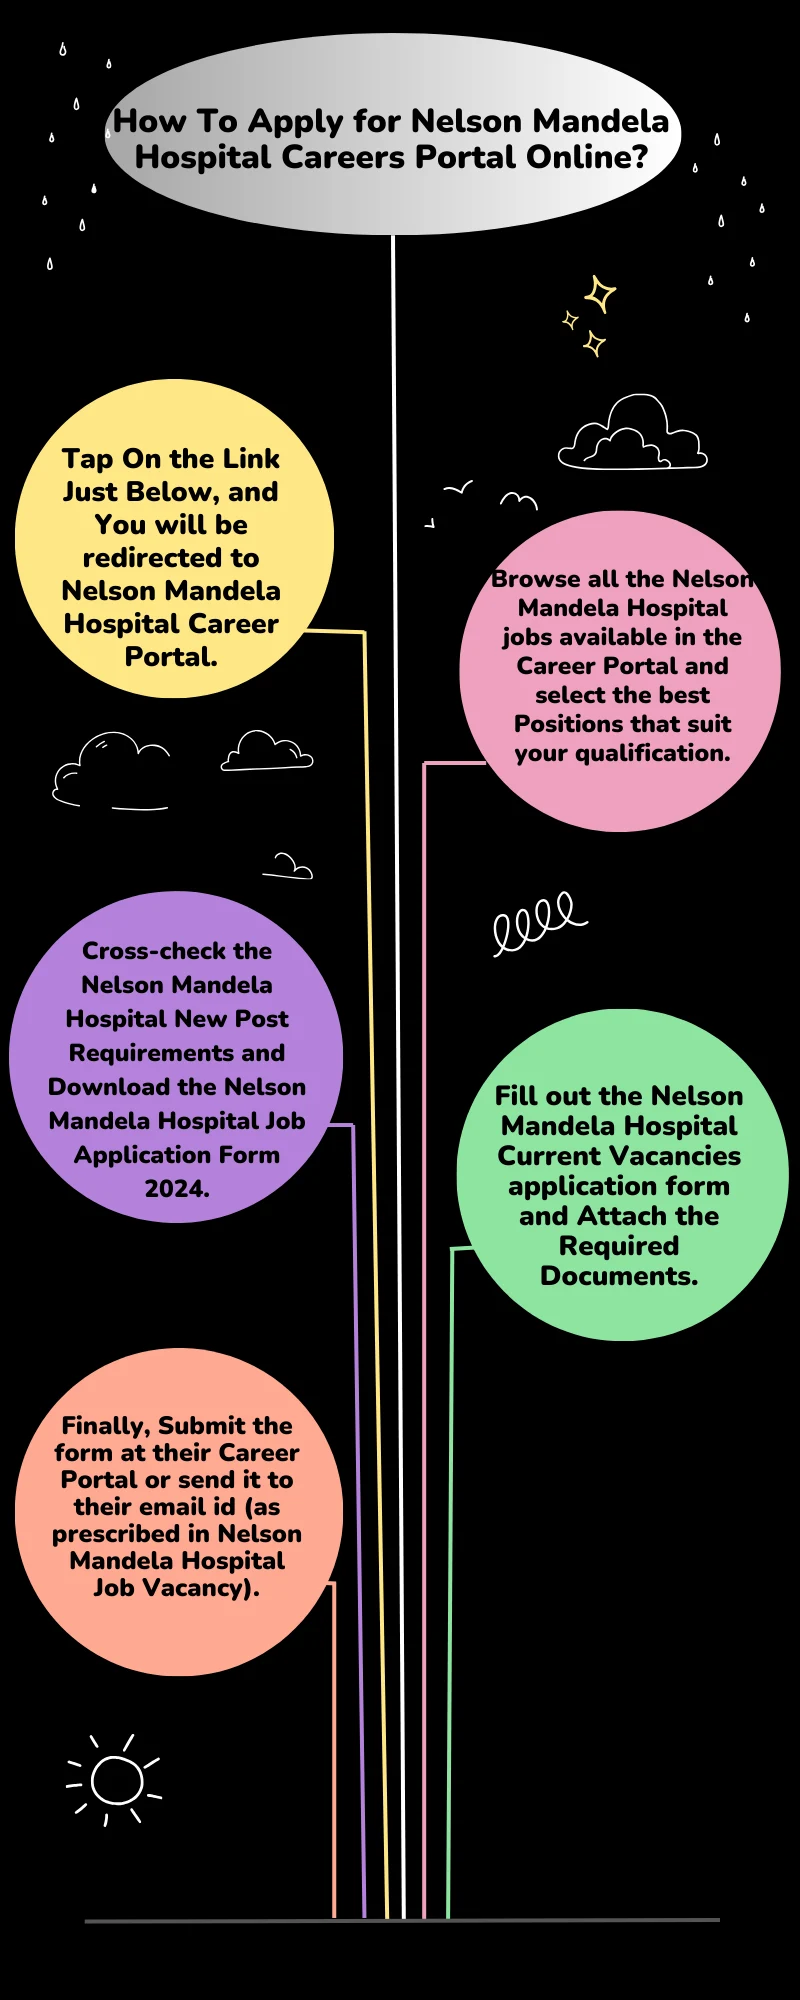 How To Apply for Nelson Mandela Hospital Careers Portal Online?